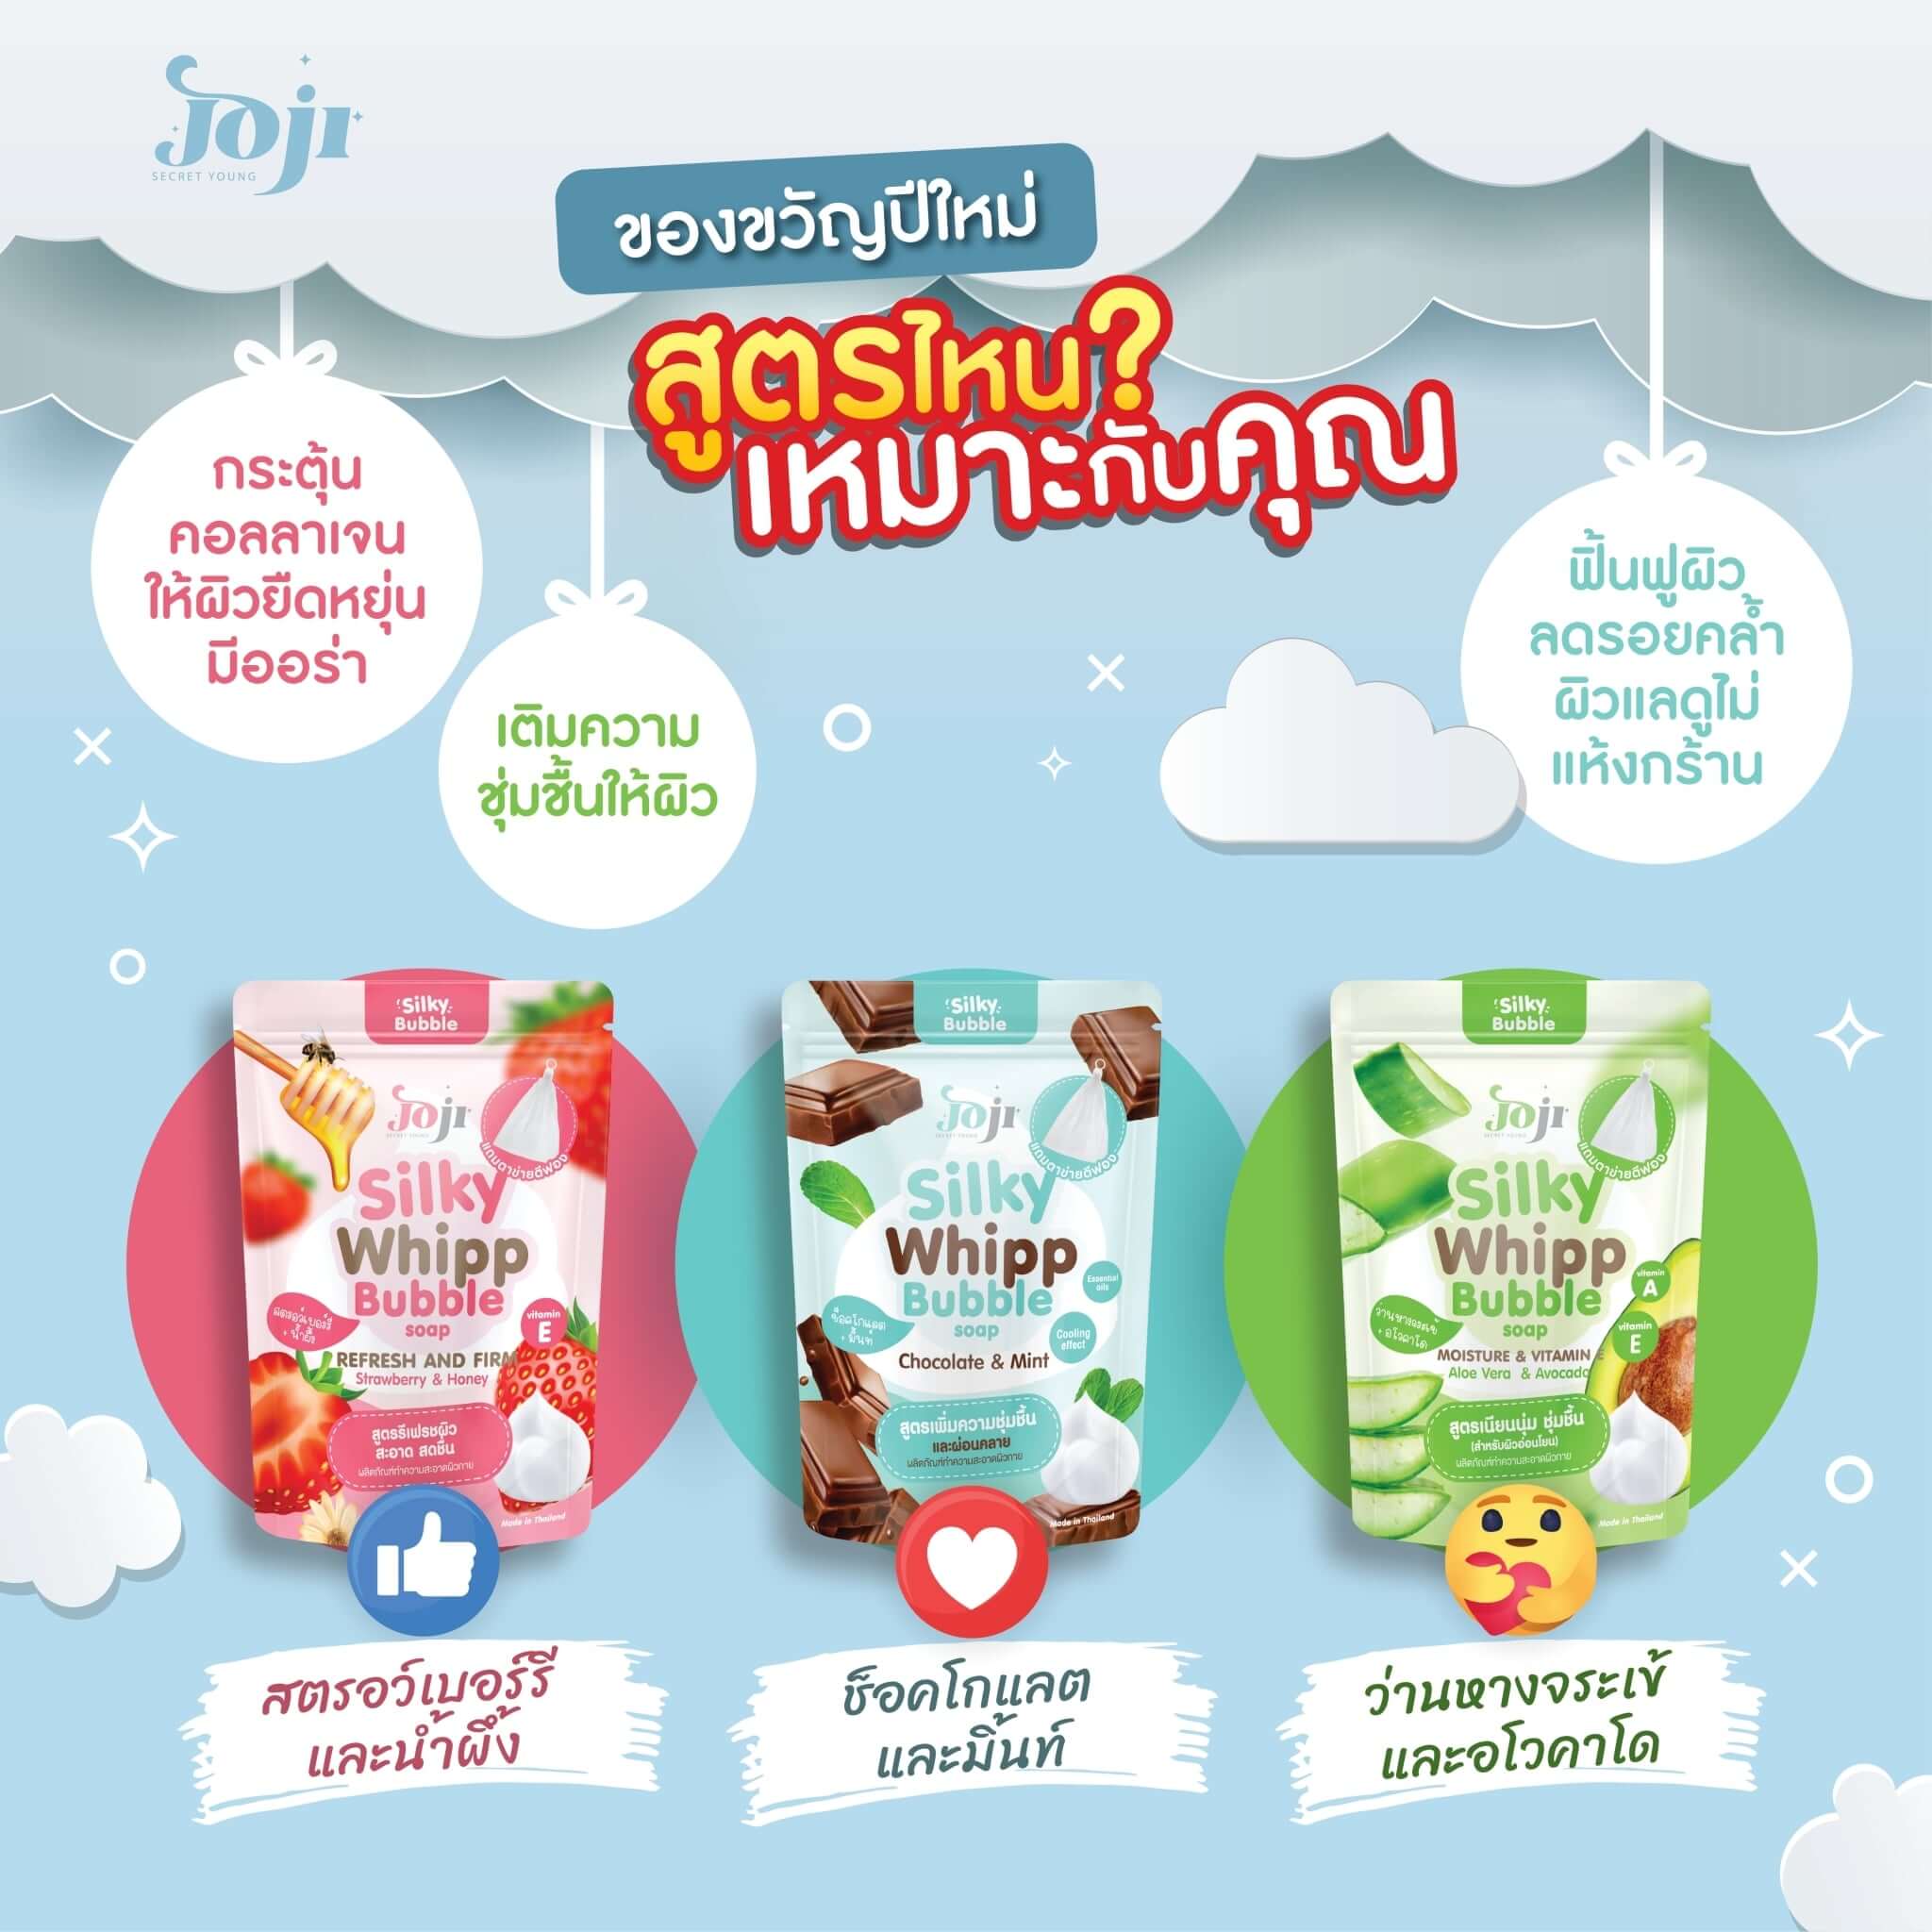 JOJI SECRET YOUNG Silky Whipp Bubble Soap #Refresh&Firm 